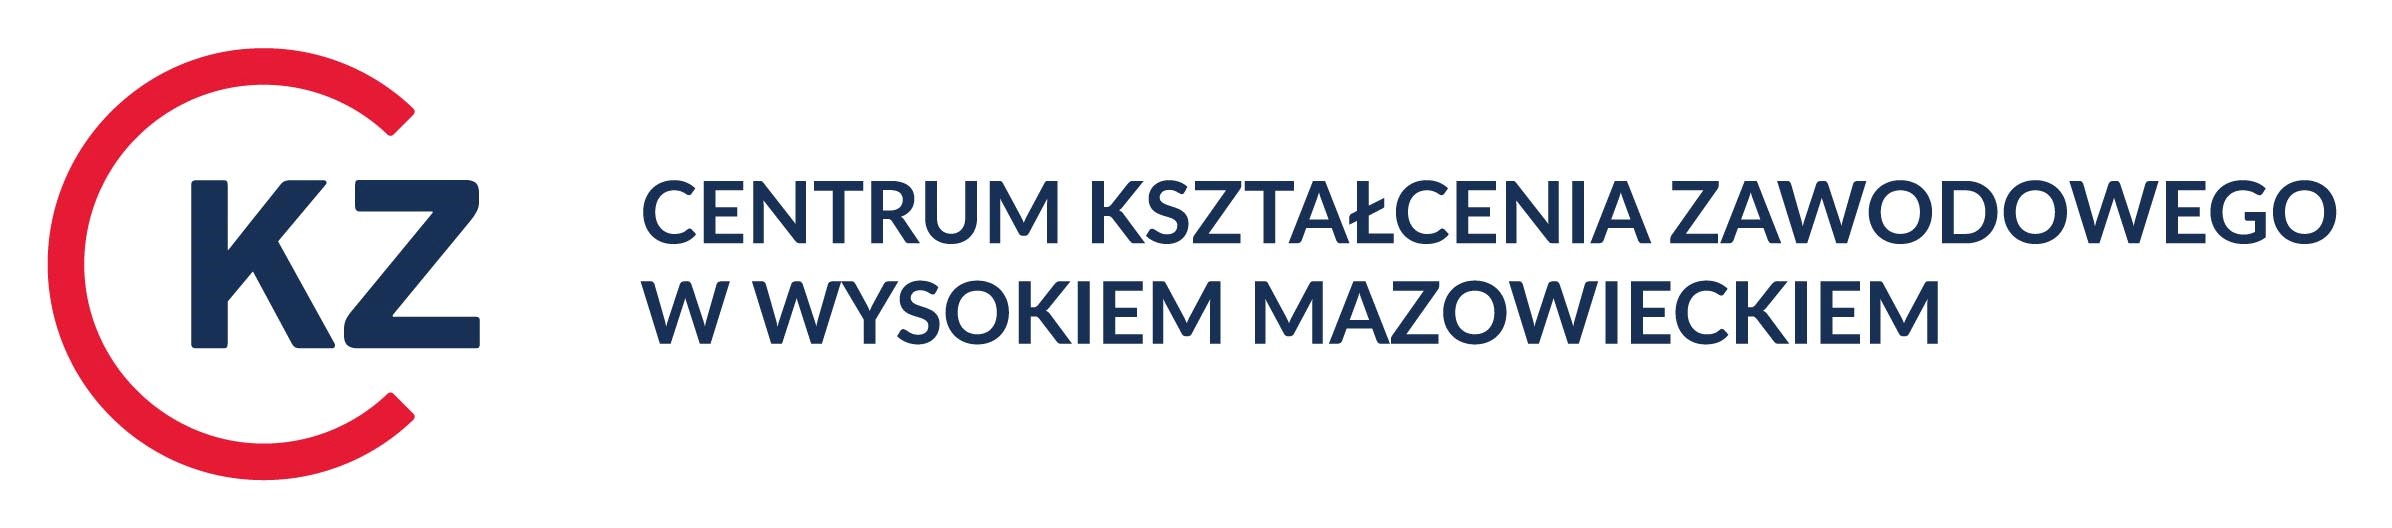 logo ckz